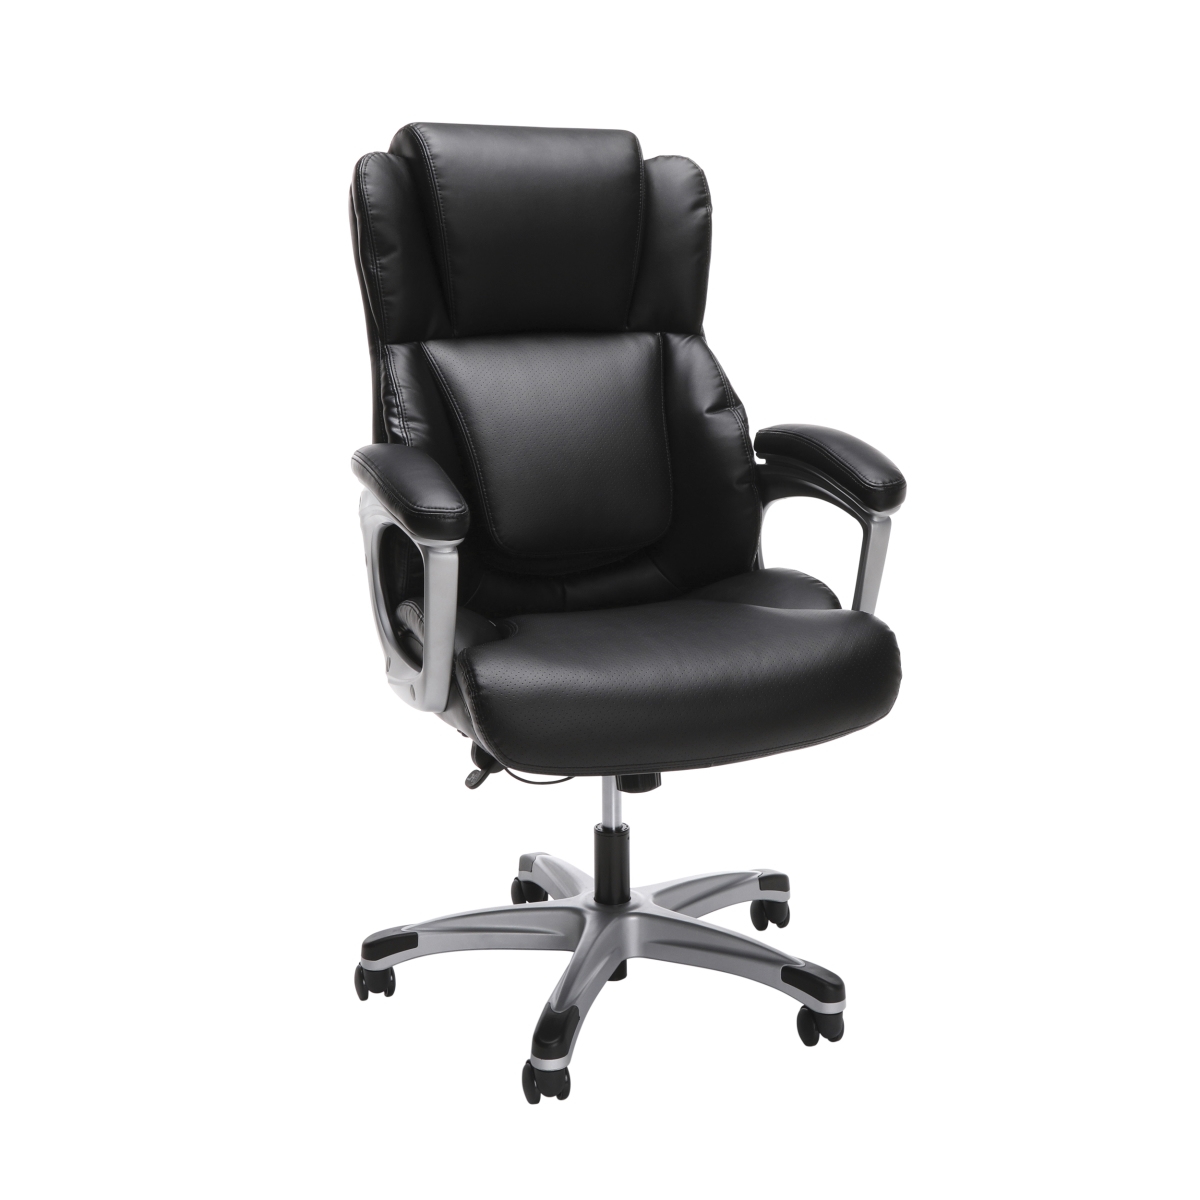 Ess-6033-blk Ergonomic Executive Bonded Leather Office Chair, Black